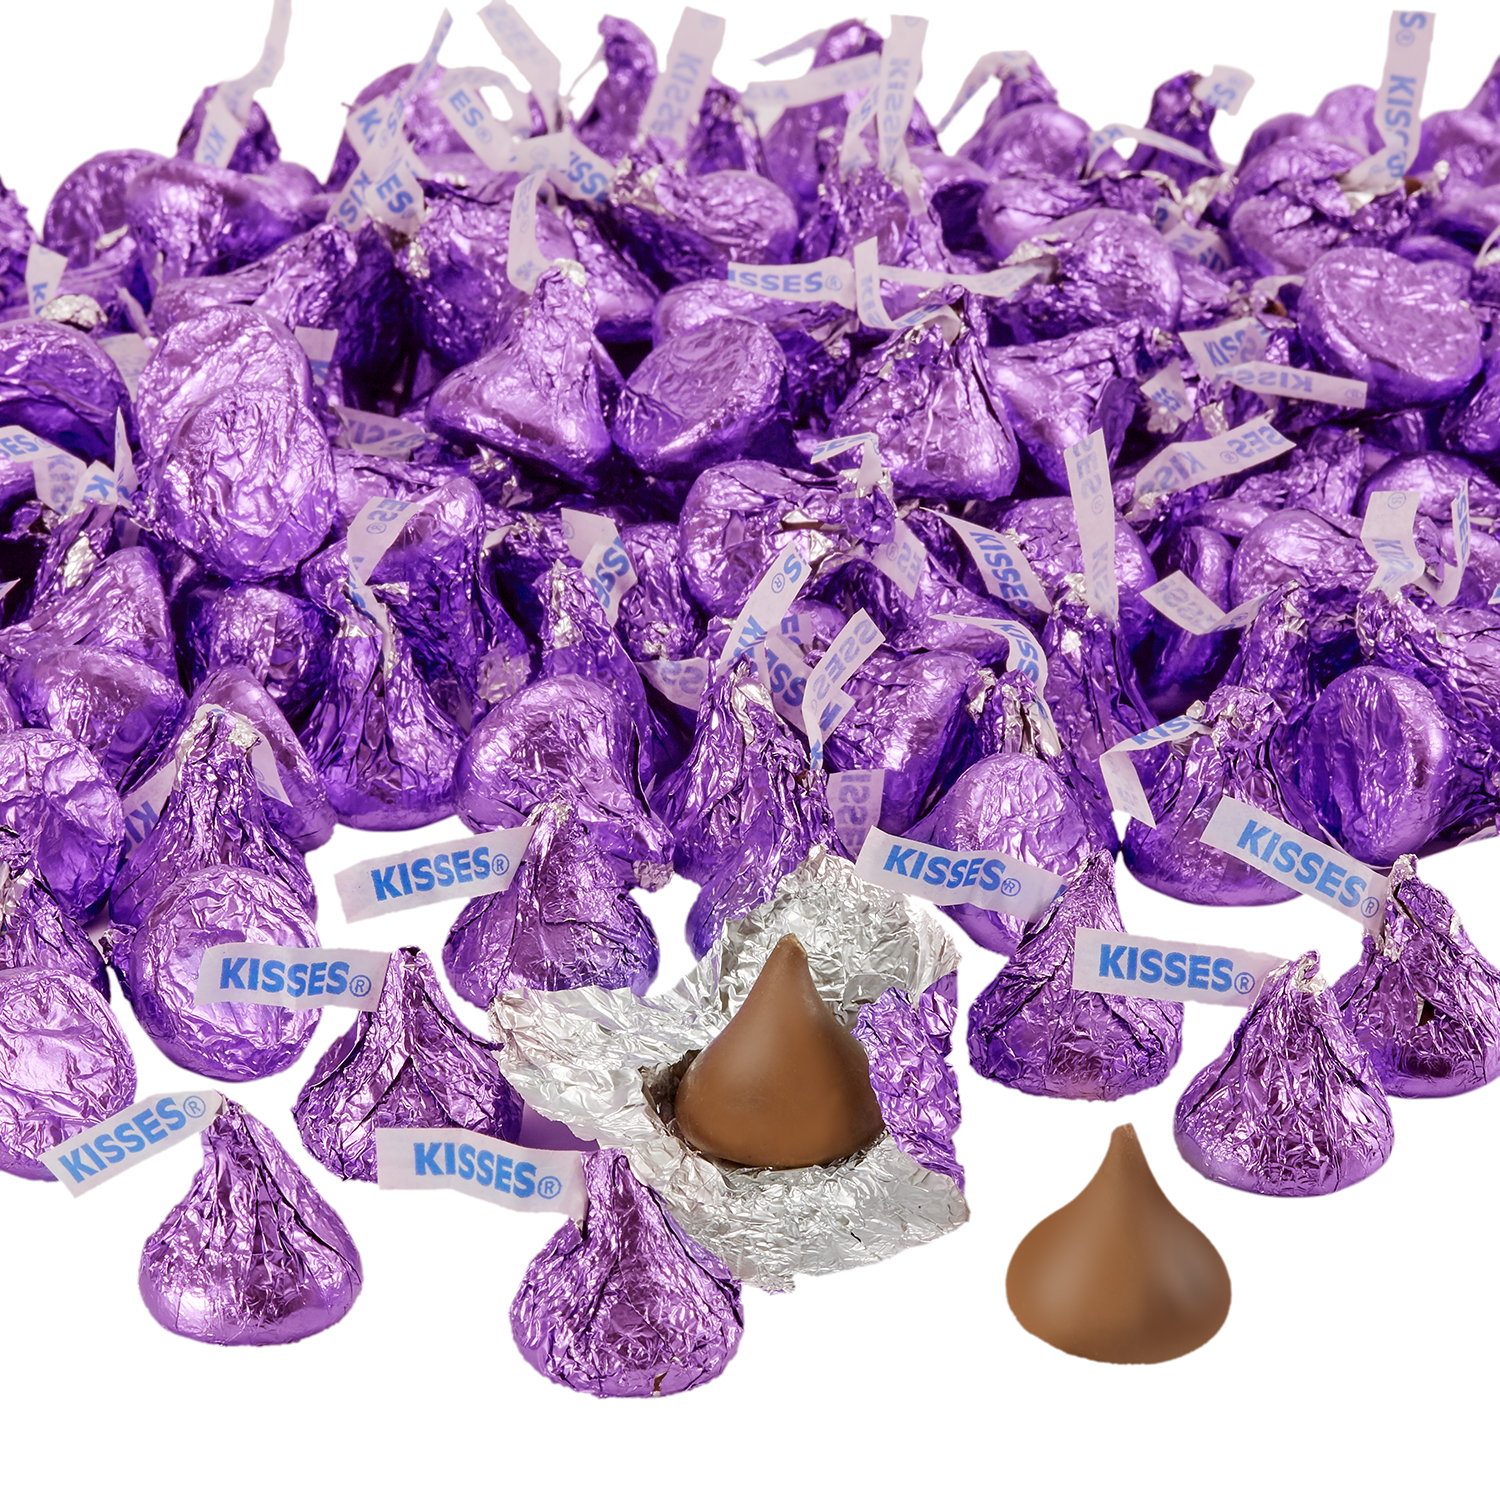 Пурпурный шоколад